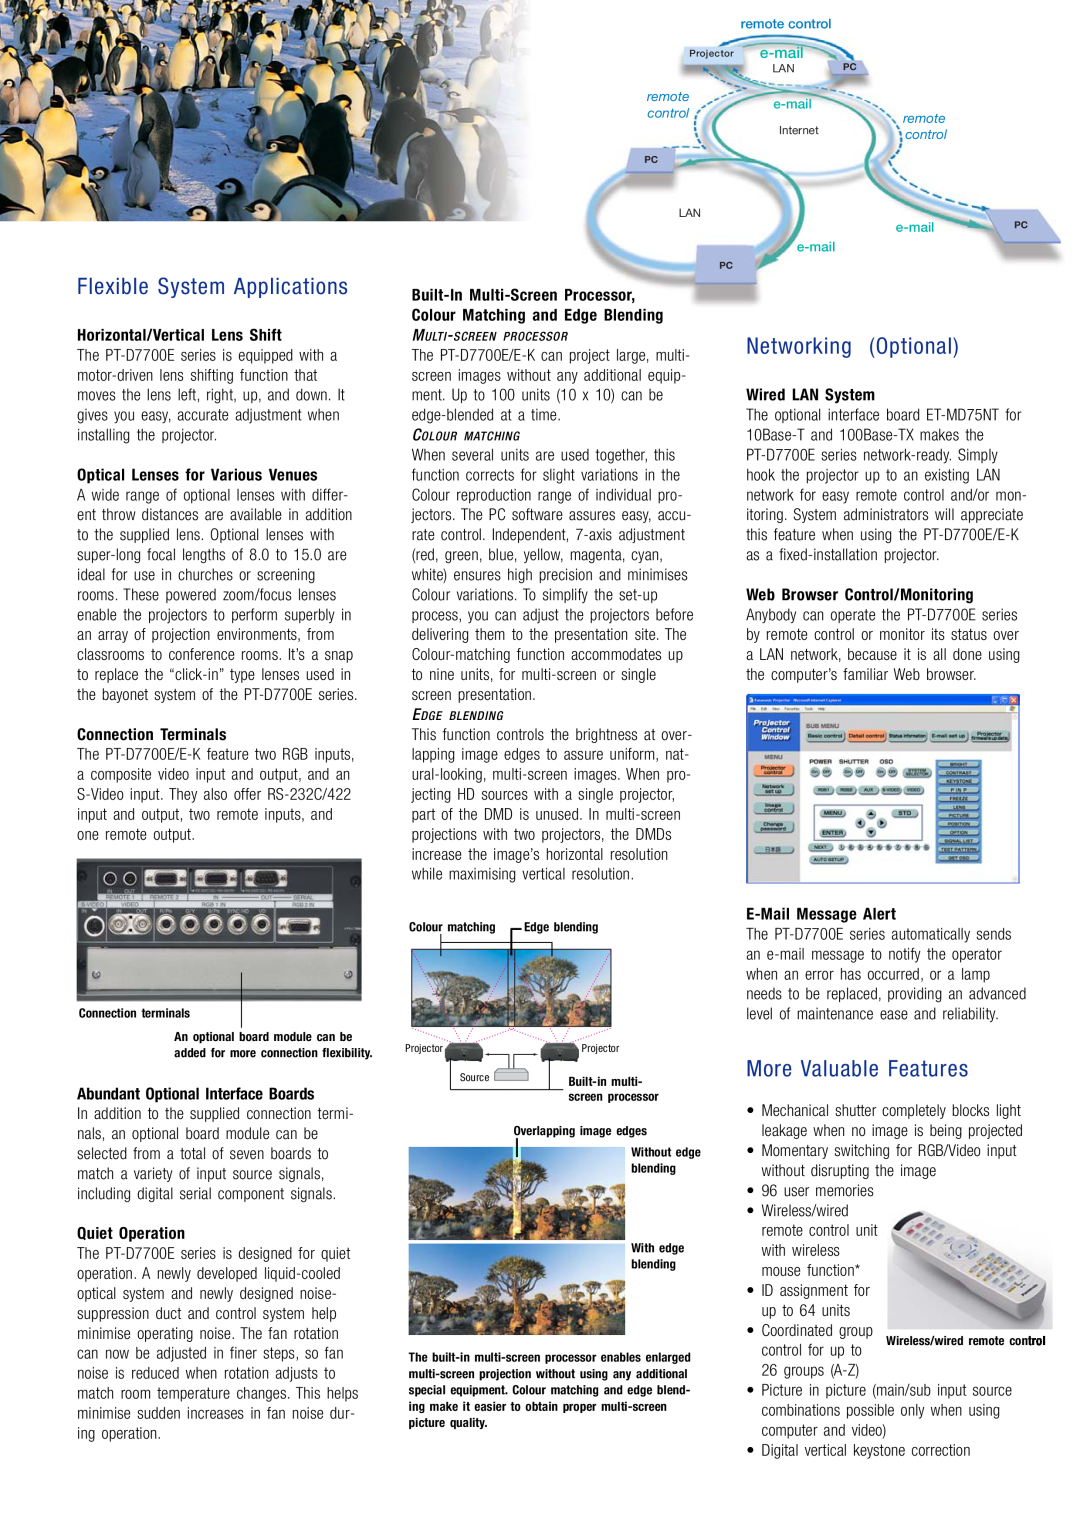 Panasonic PT-D7700E-K Flexible System Applications, Networking Optional, More Valuable Features, Connection Terminals 